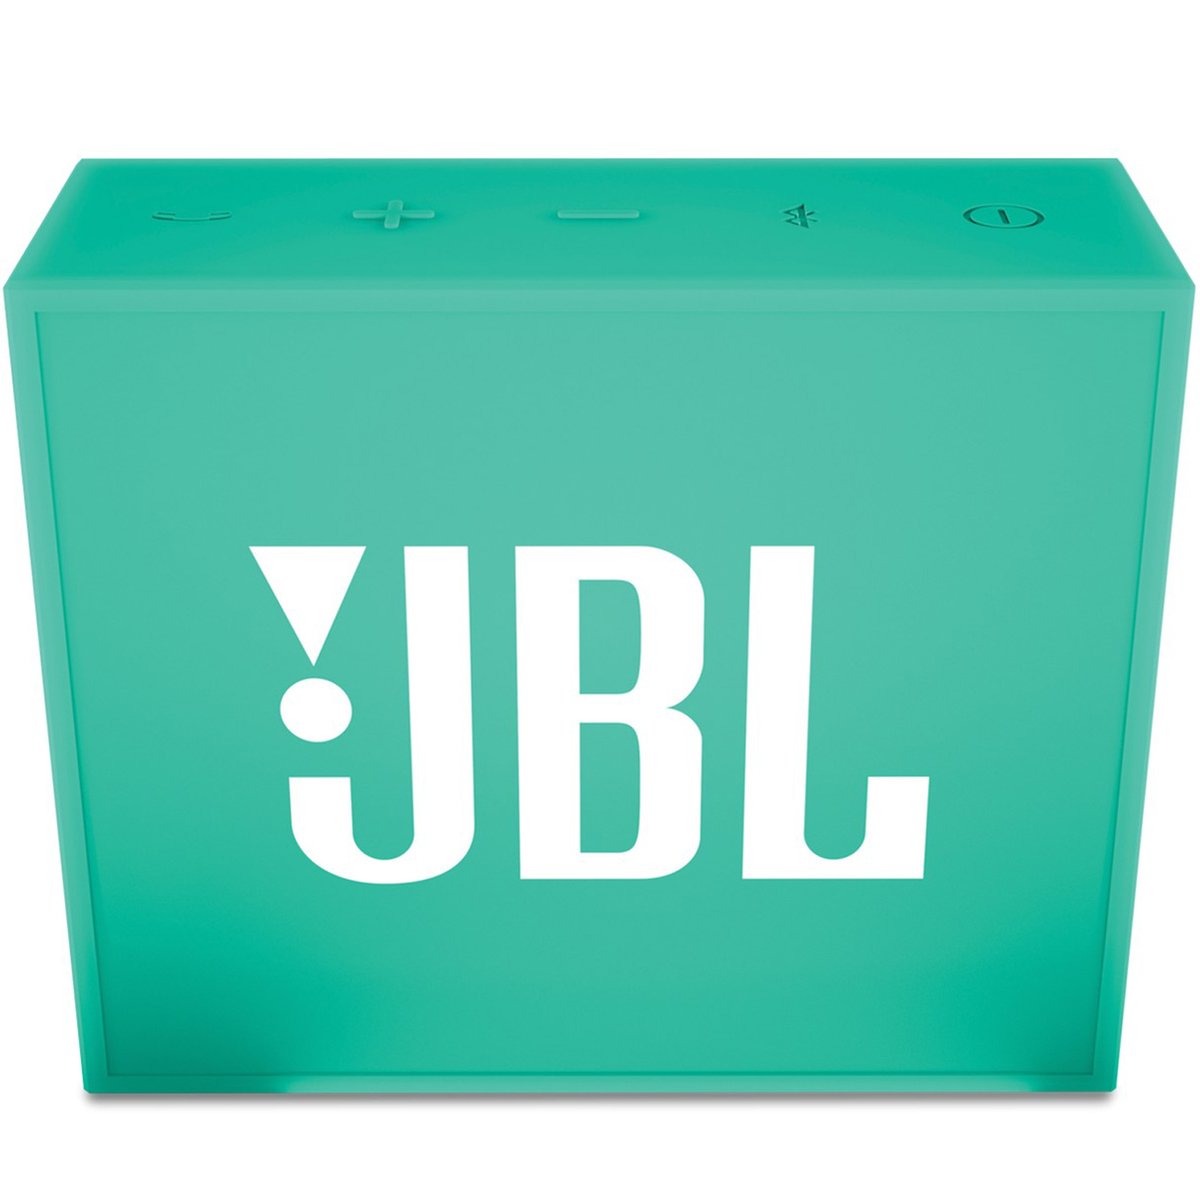 JBL Portable Bluetooth Speaker JBLGO Teal